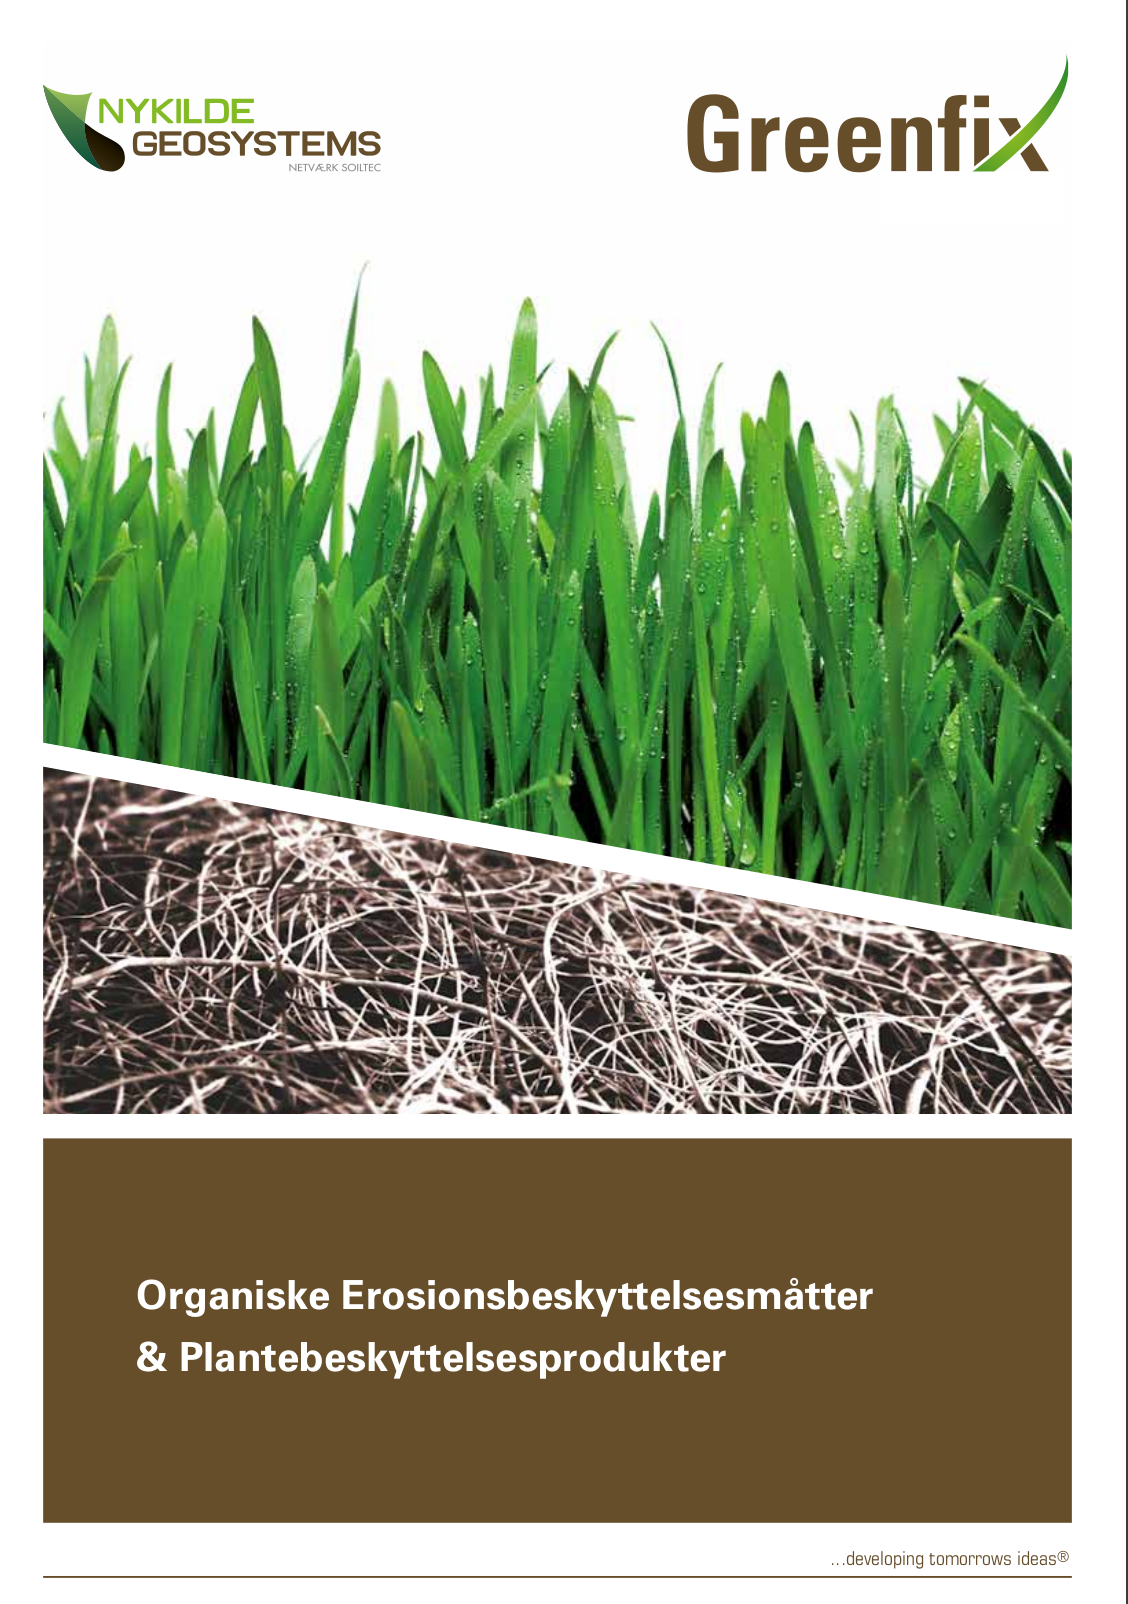 Greenfix organisk erosions- & plantebeskyttelse